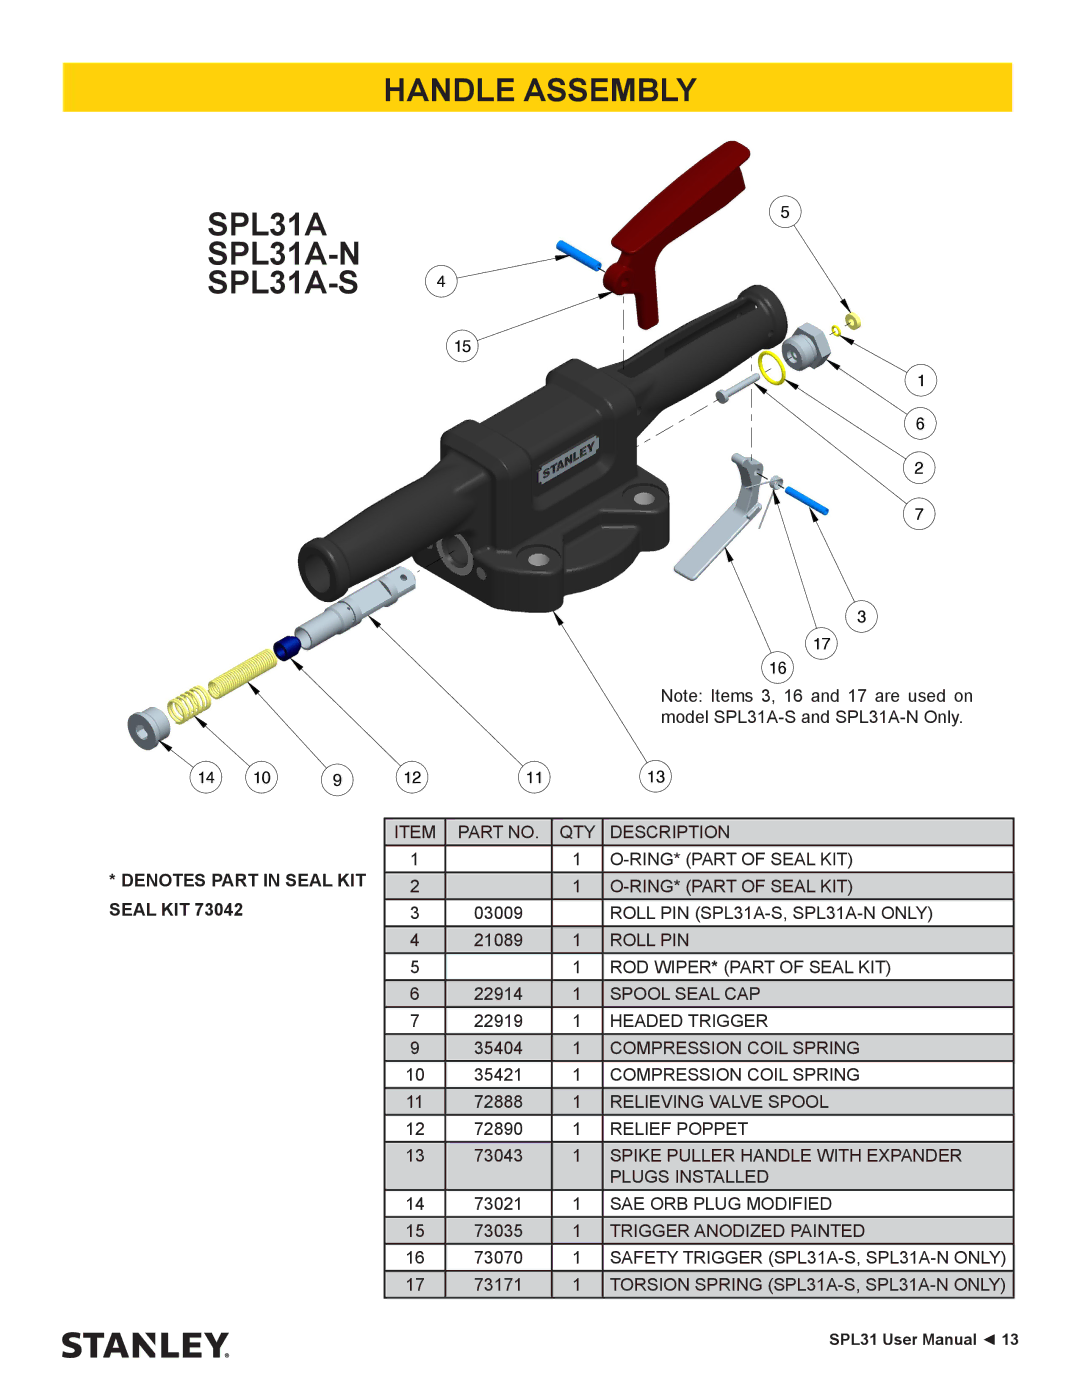 Stanley Black & Decker user manual Handle Assembly SPL31A SPL31A-N SPL31A-S, Denotes Part in Seal KIT 